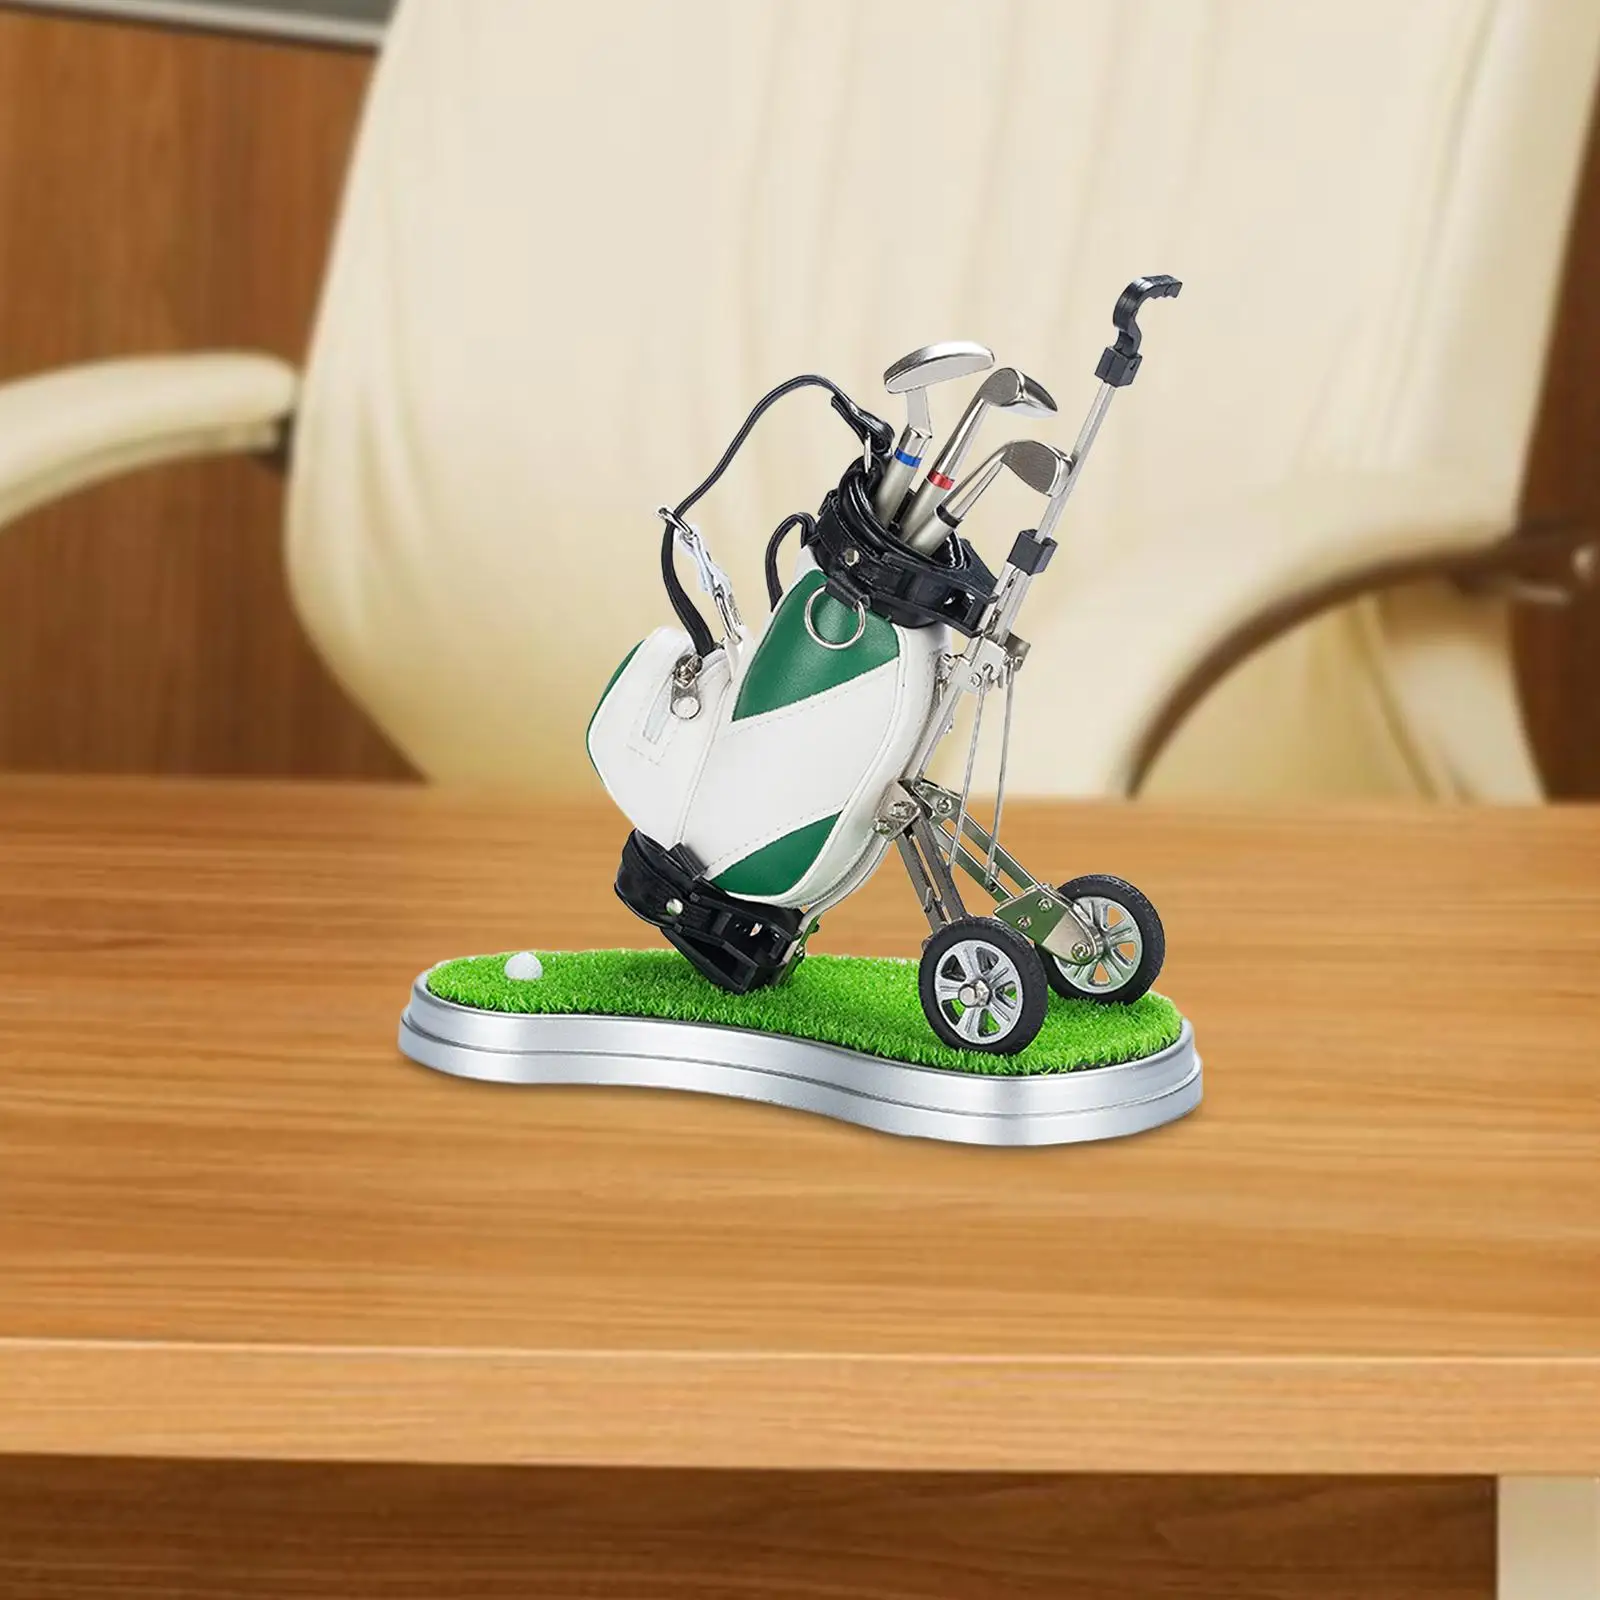 Mini Golf Pens with Golf Bag Holder with Cart Desktop Decoration for Men Novelty Gifts Multipurpose Lightweight Stylish Sturdy